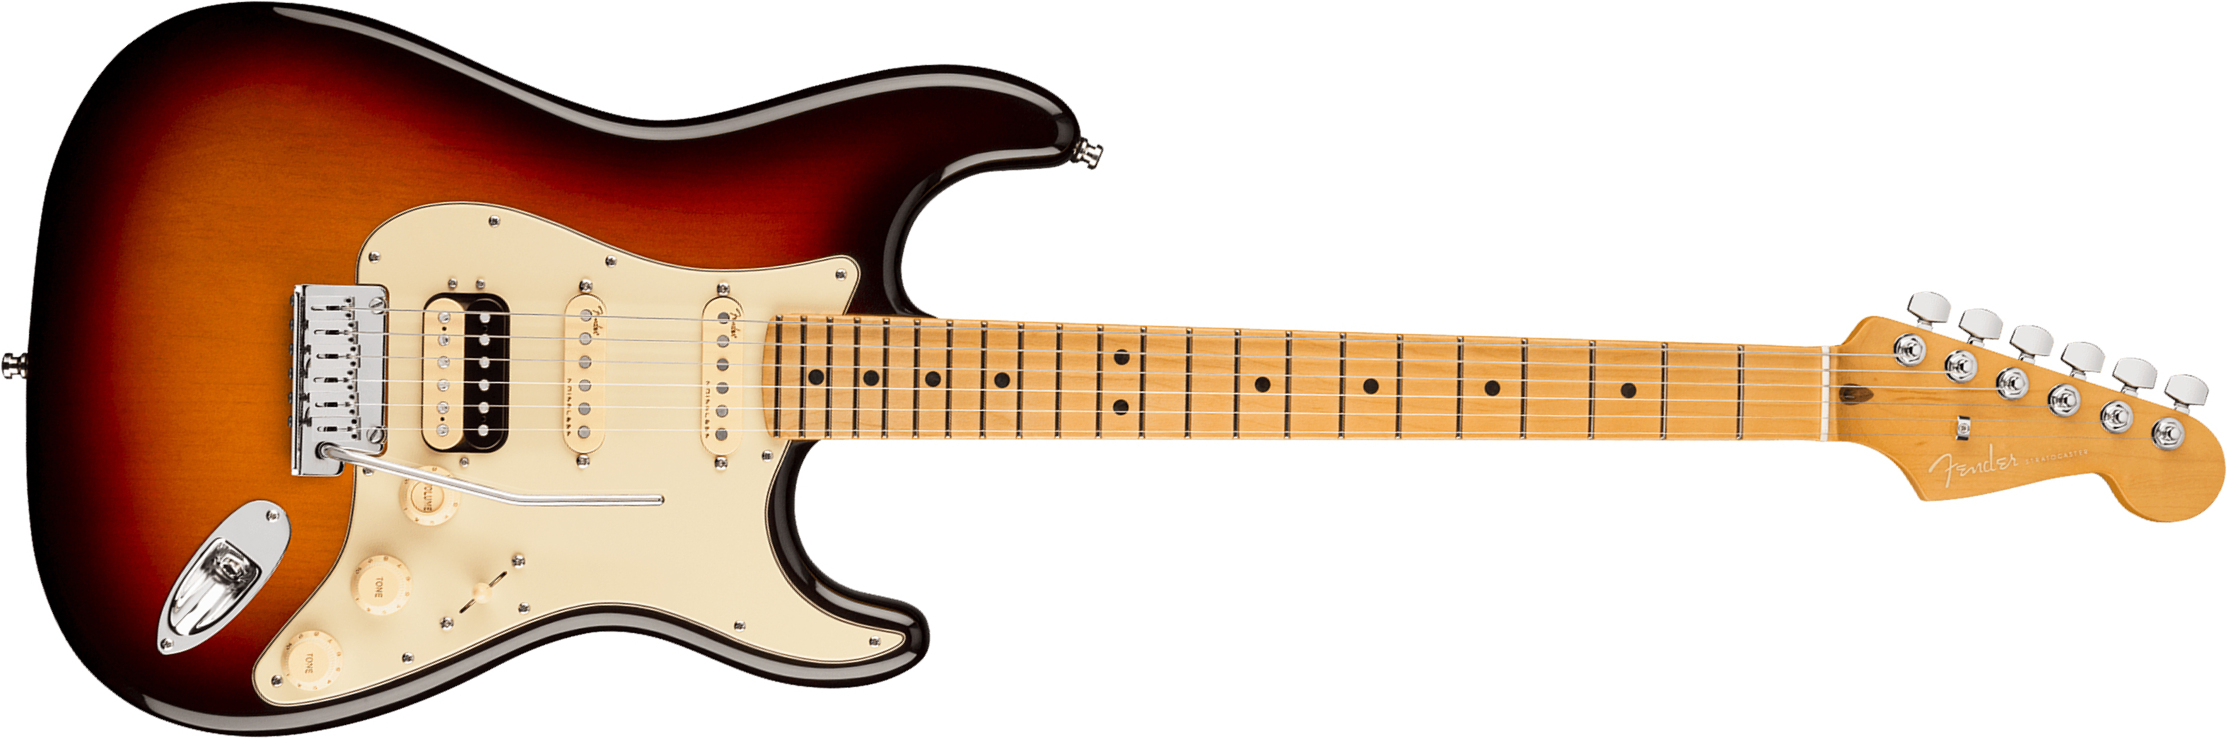 Fender Strat American Ultra Hss 2019 Usa Mn - Ultraburst - Guitare Électrique Forme Str - Main picture